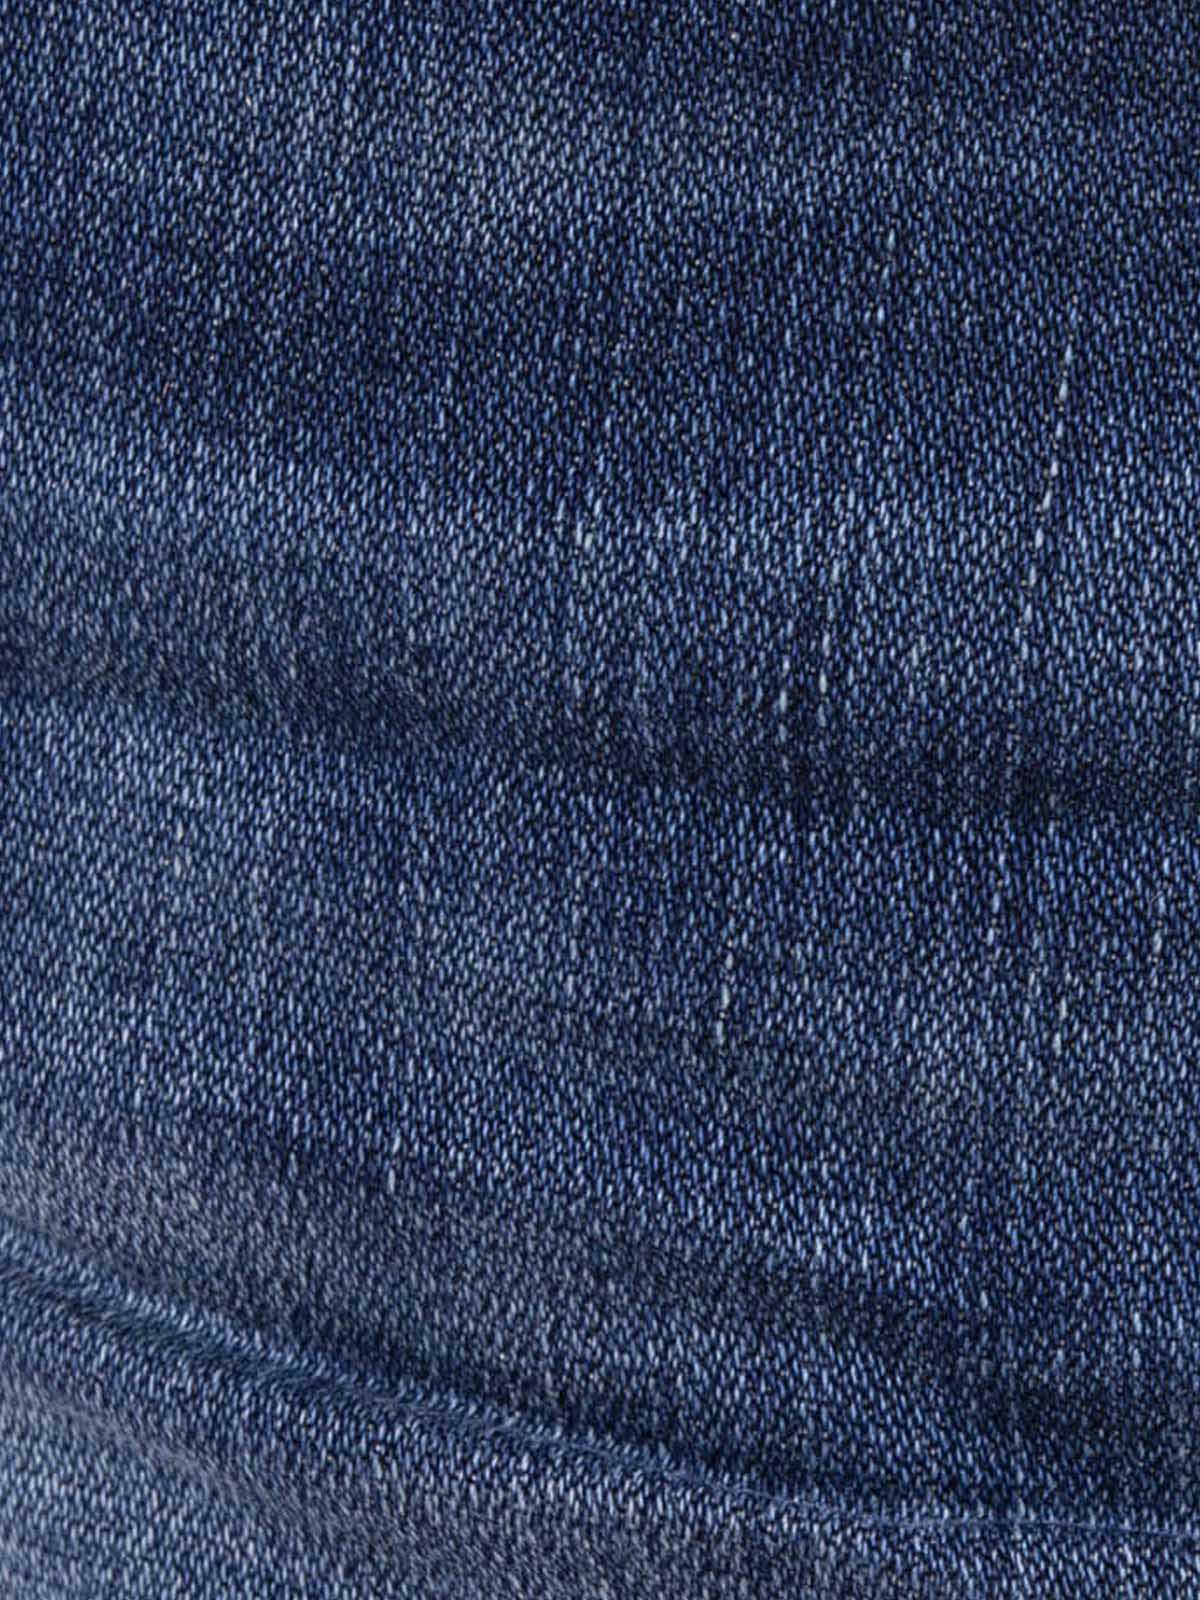 Jeans Moshe 72174 L34 Blue